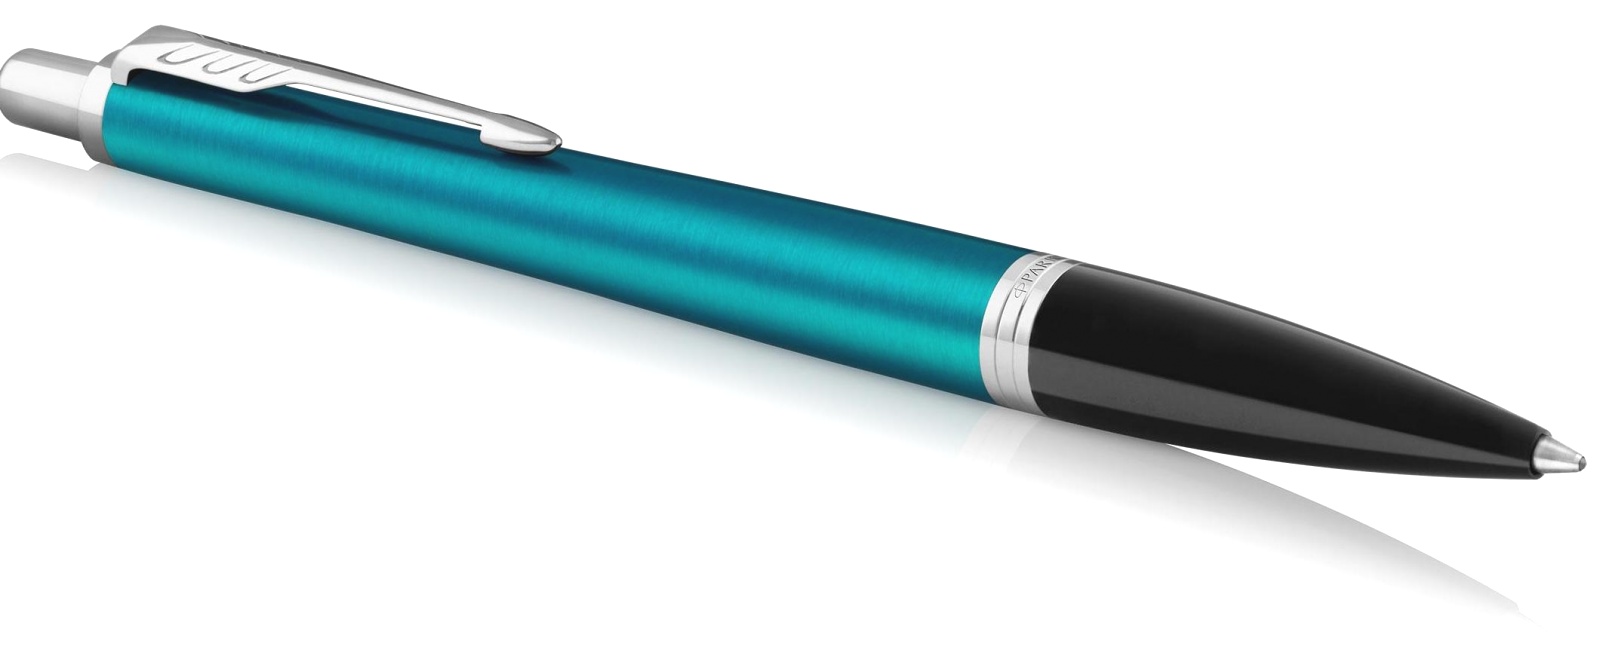  Ручка шариковая Parker Urban Core K309, Vibrant Blue CT, фото 2